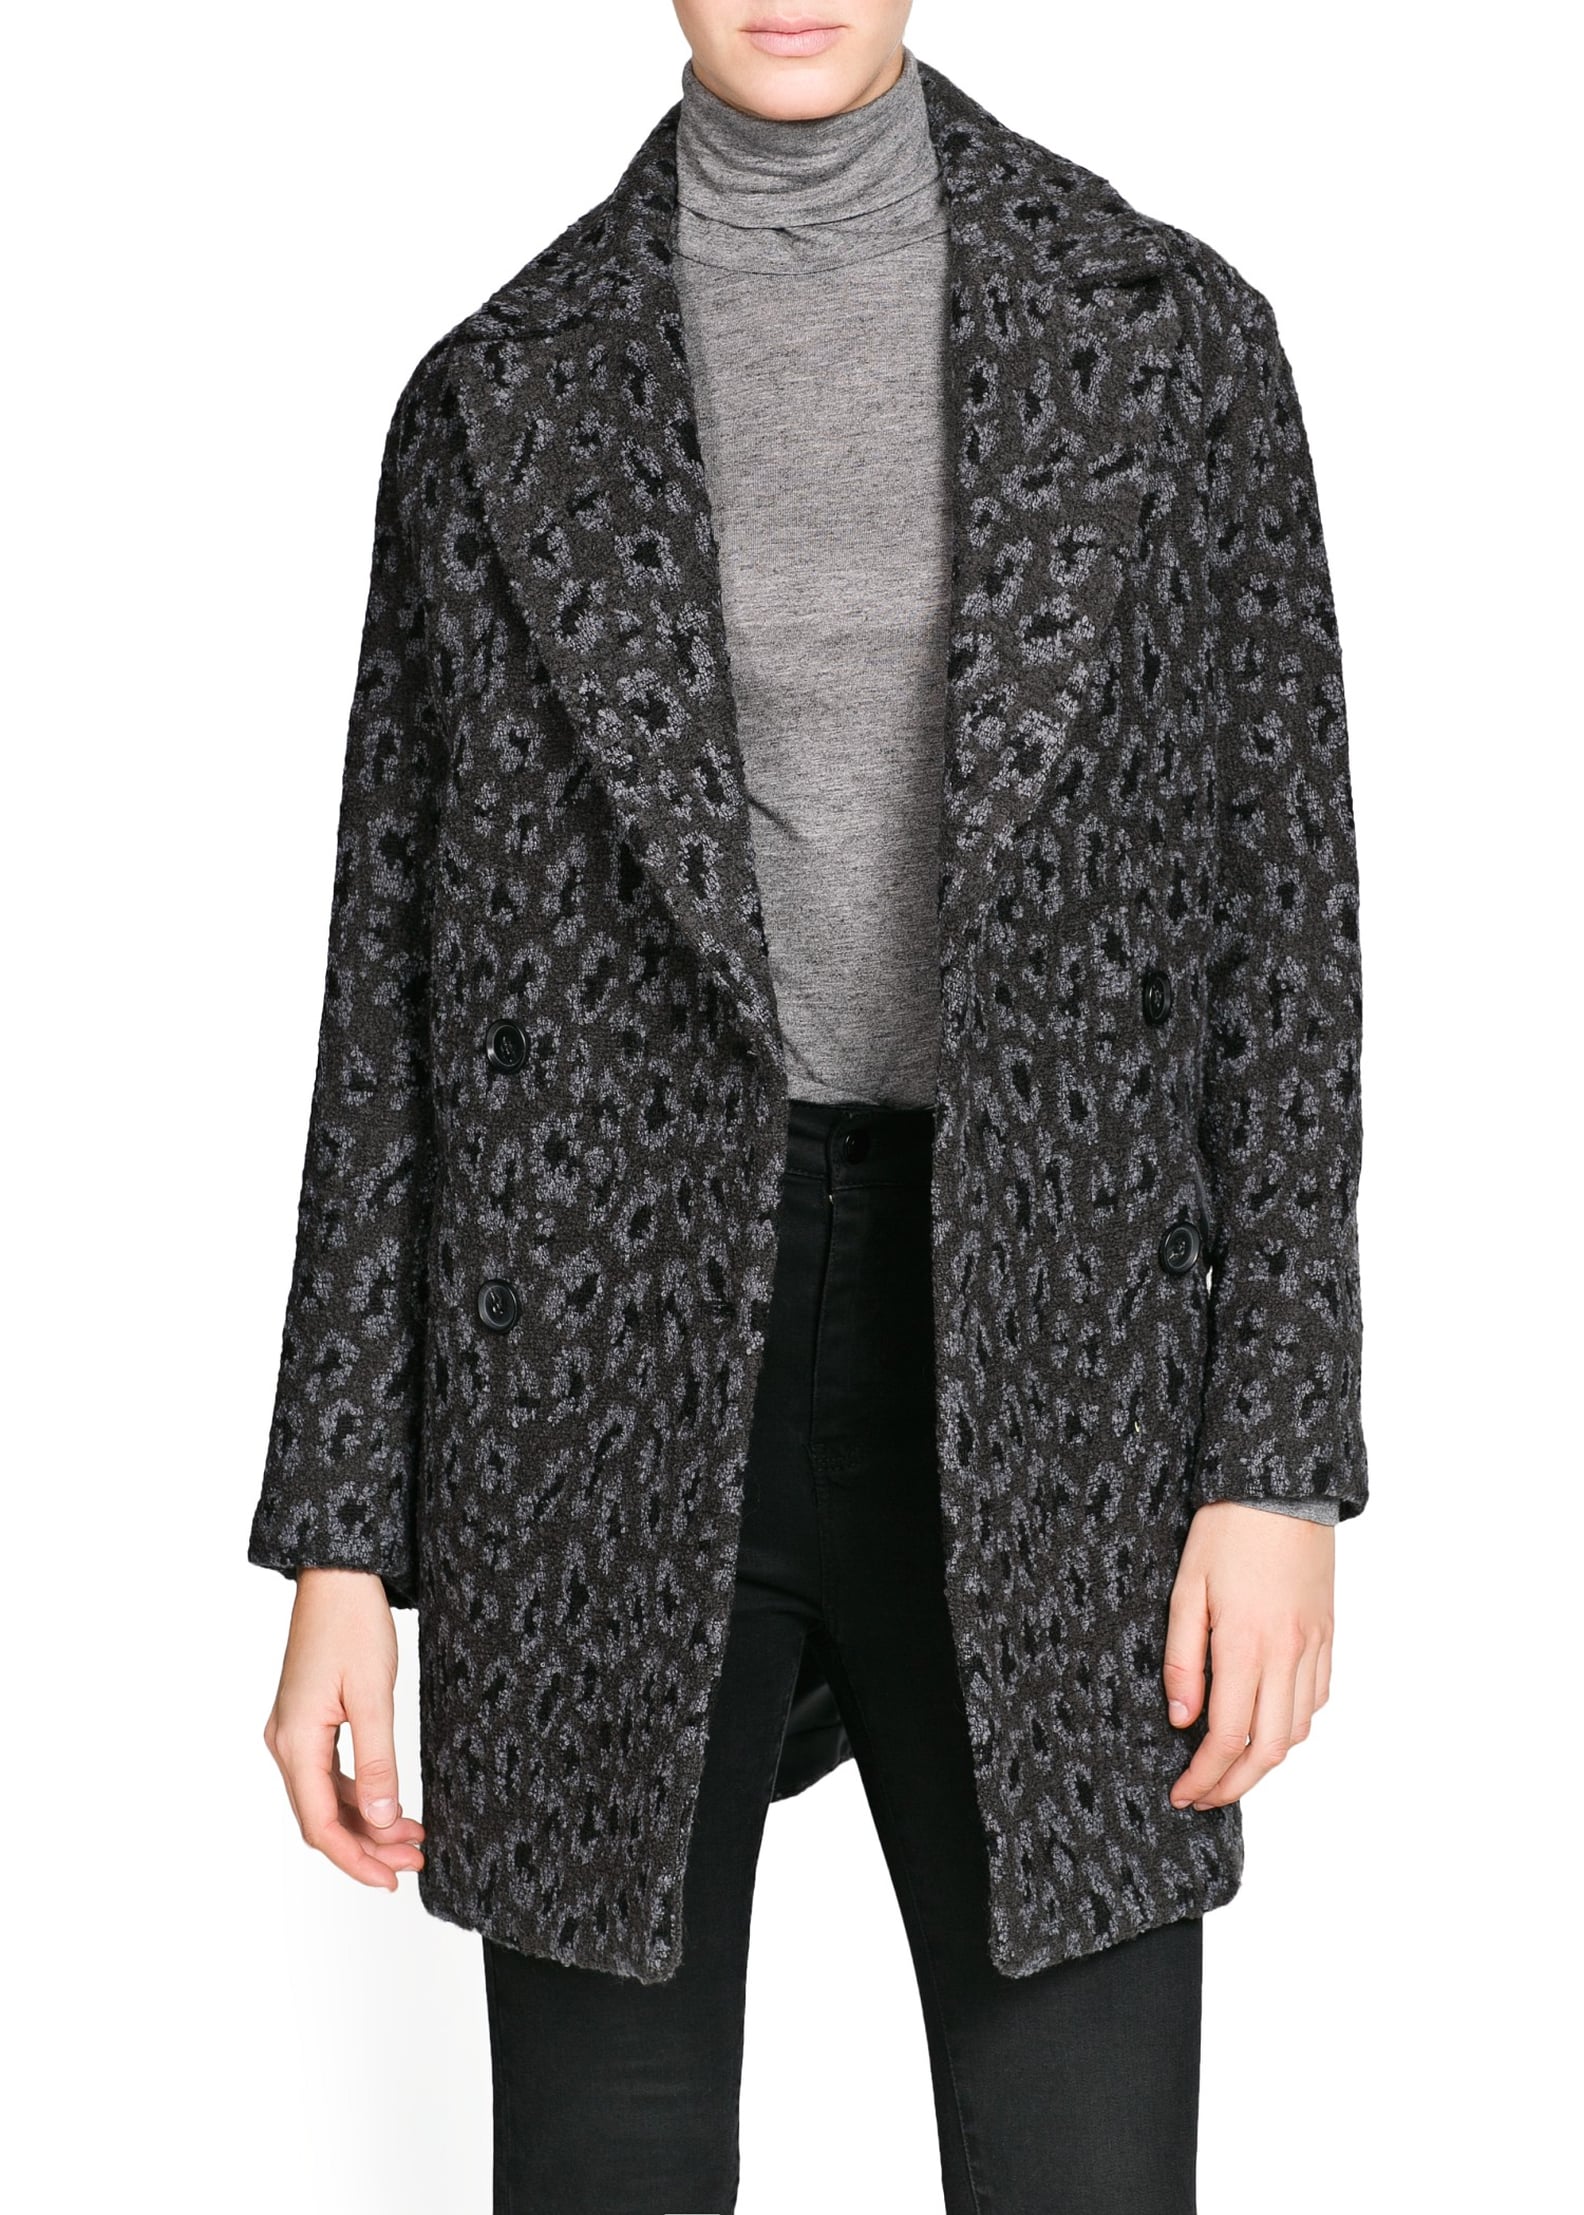 Leopard Coats | POPSUGAR Fashion